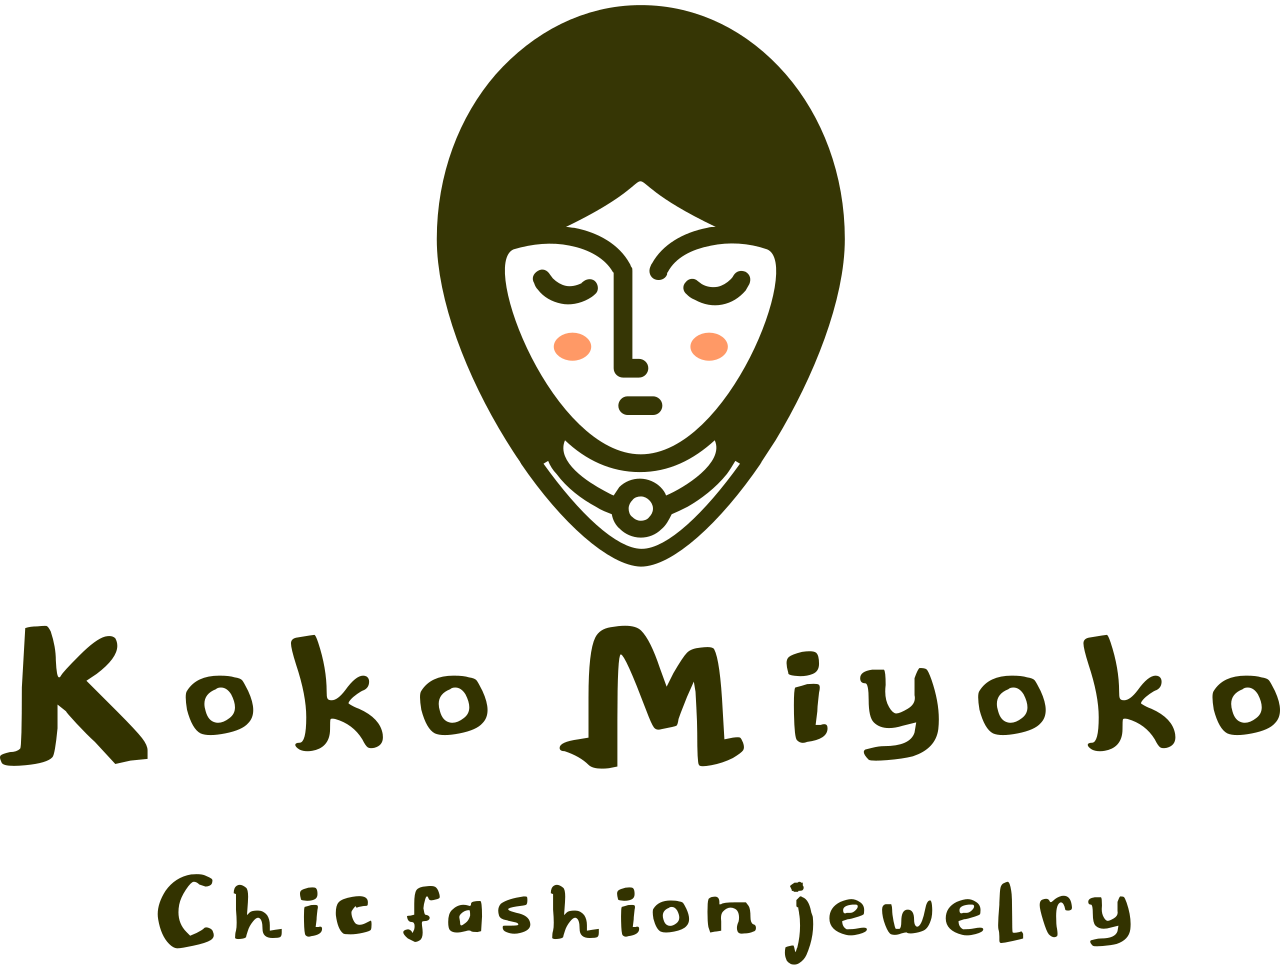 Koko Miyoko Jewelry's web page